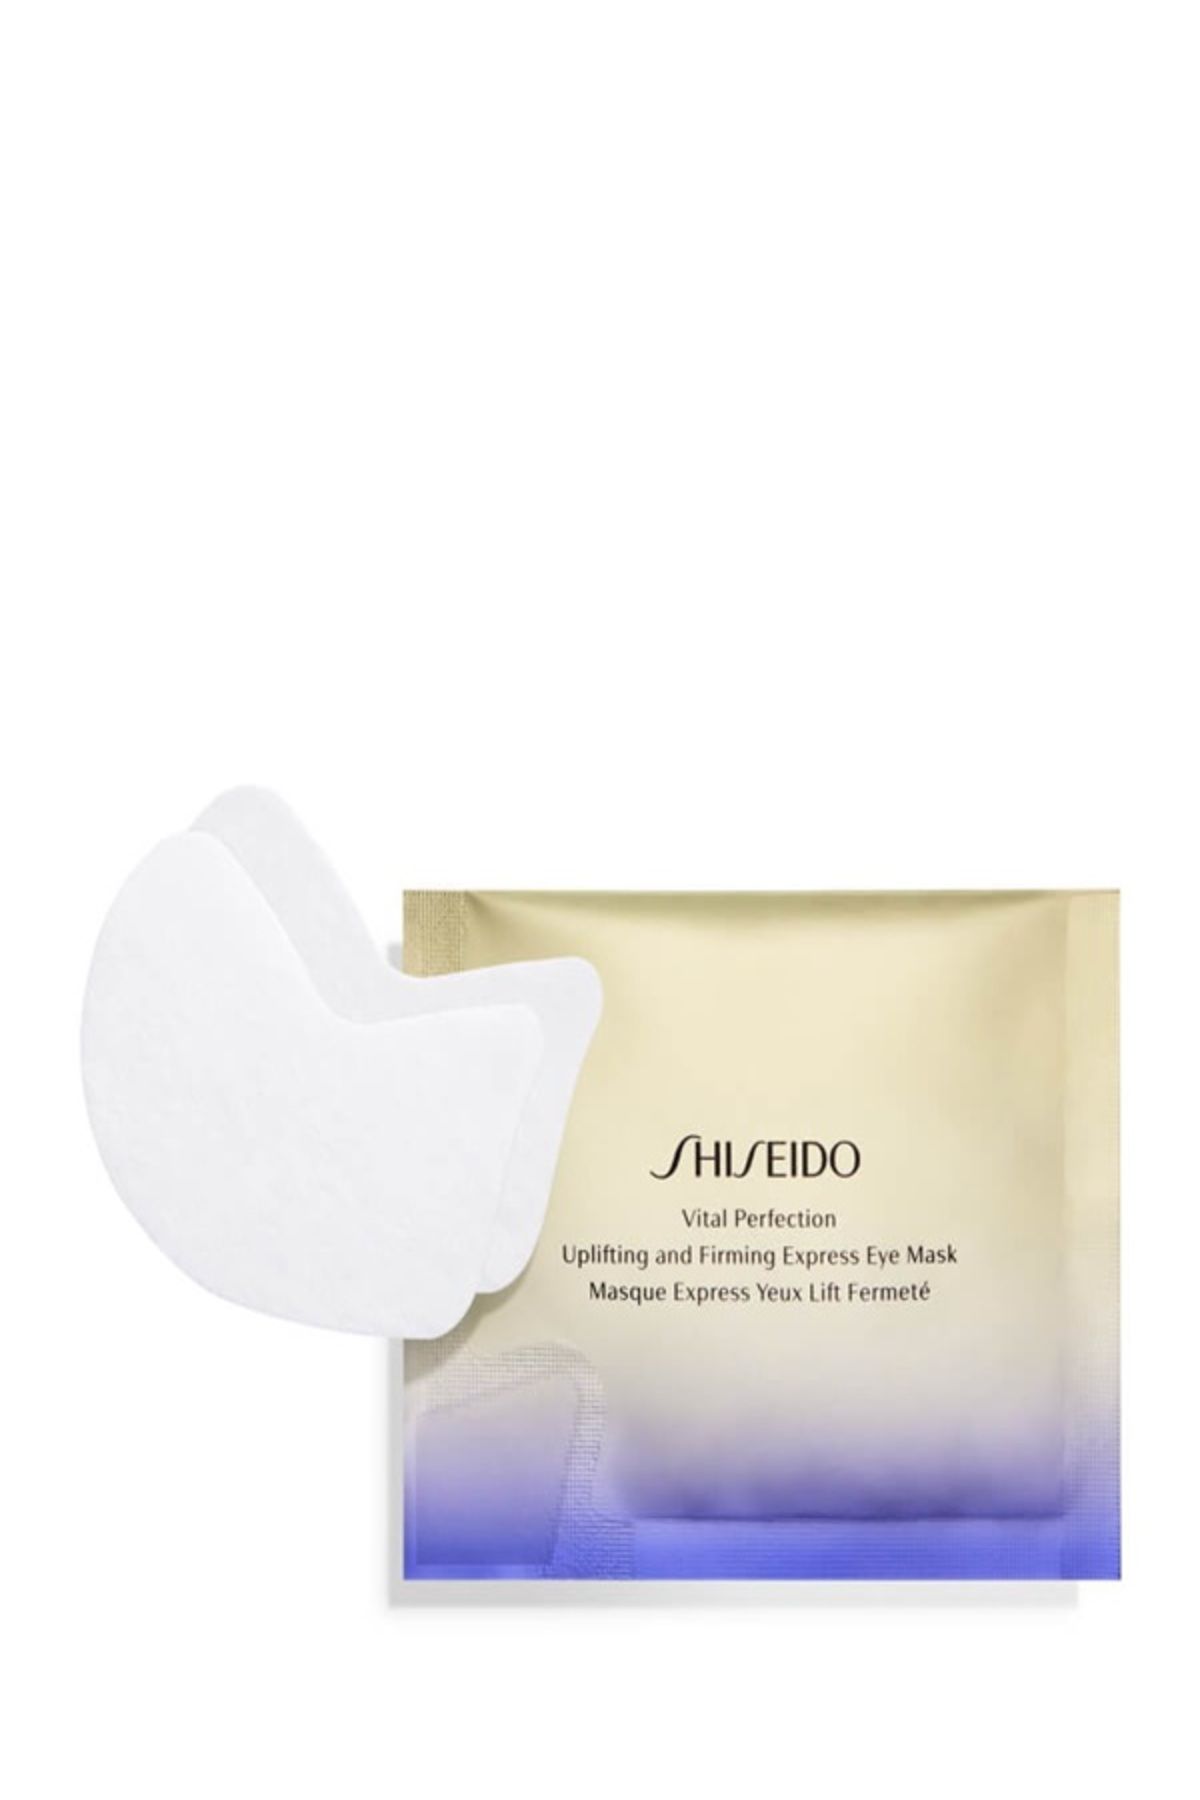 Shiseido ماسک چشم ضدپیری و فرم‌دهی ویتامین A و رتینول با نام تجاری و برند شیسیدو